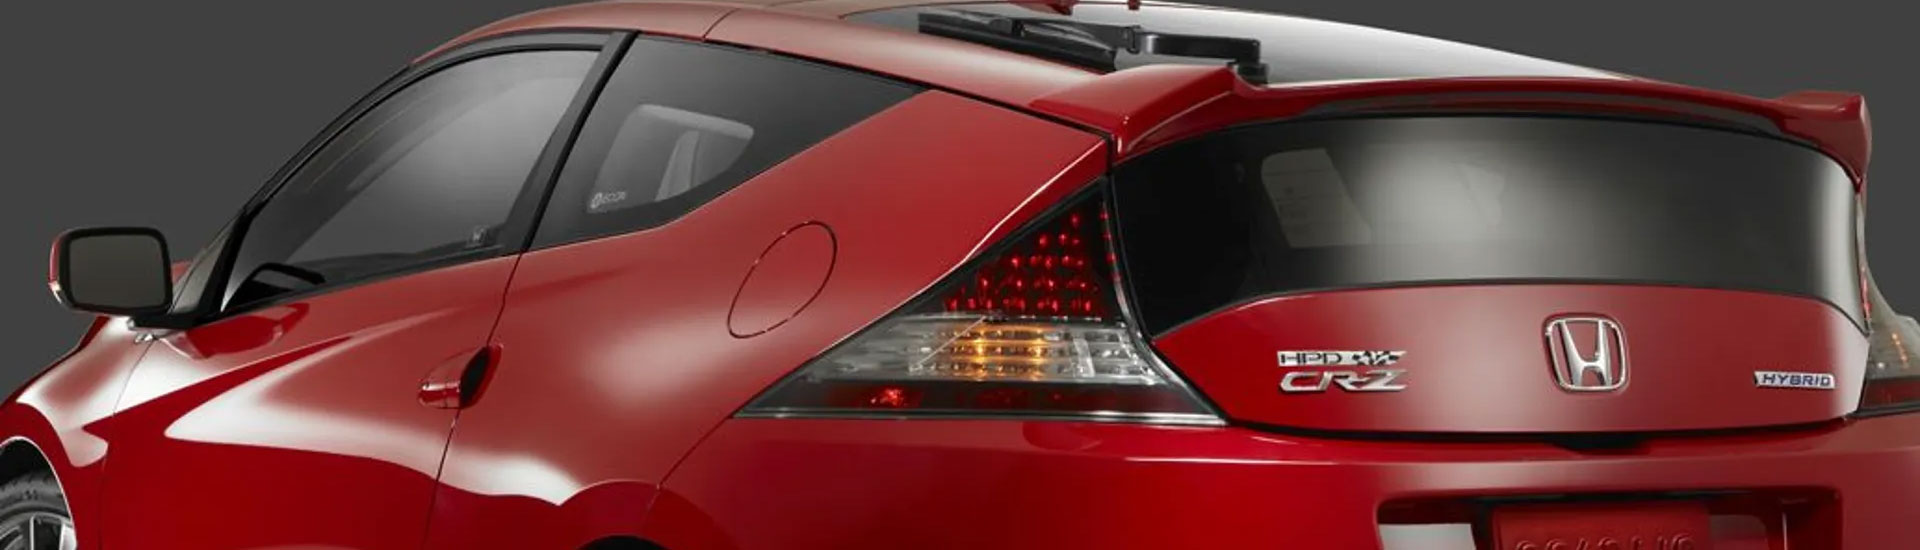 Honda CR-Z Tail Light Tint Covers